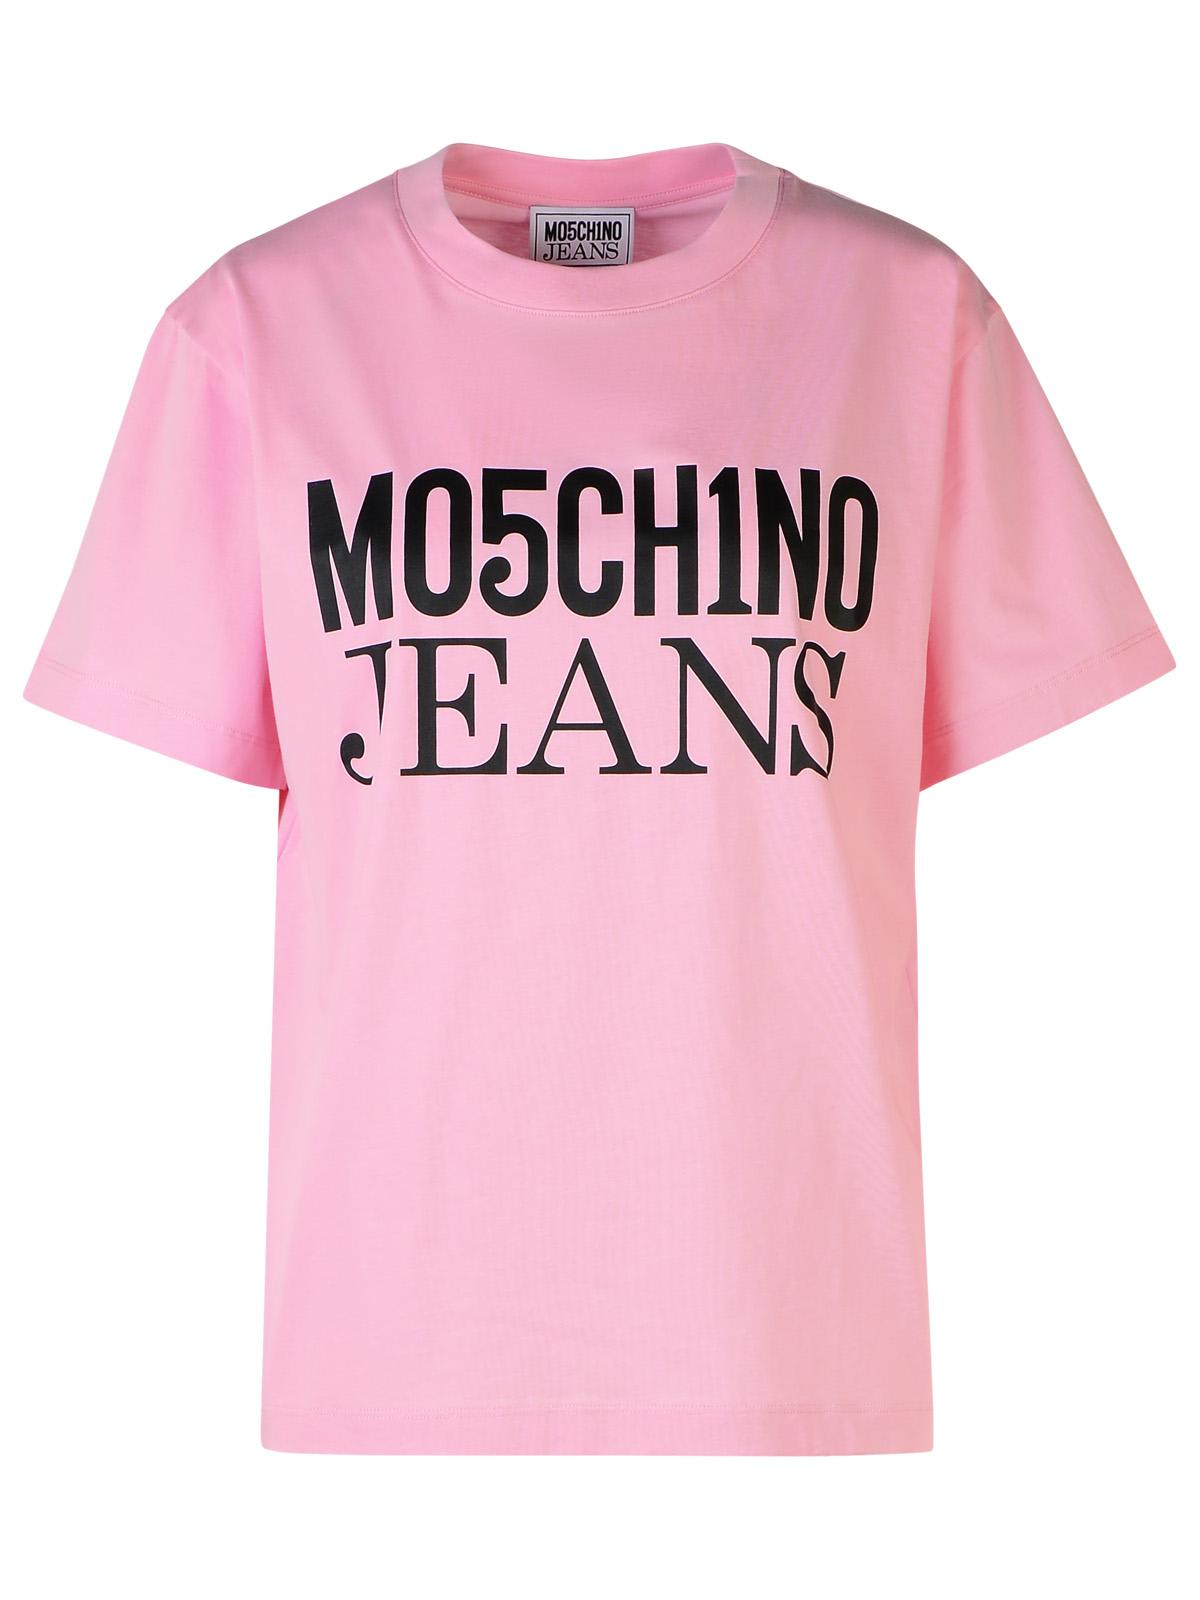 M05ch1n0 Jeans Pink Cotton T-shirt